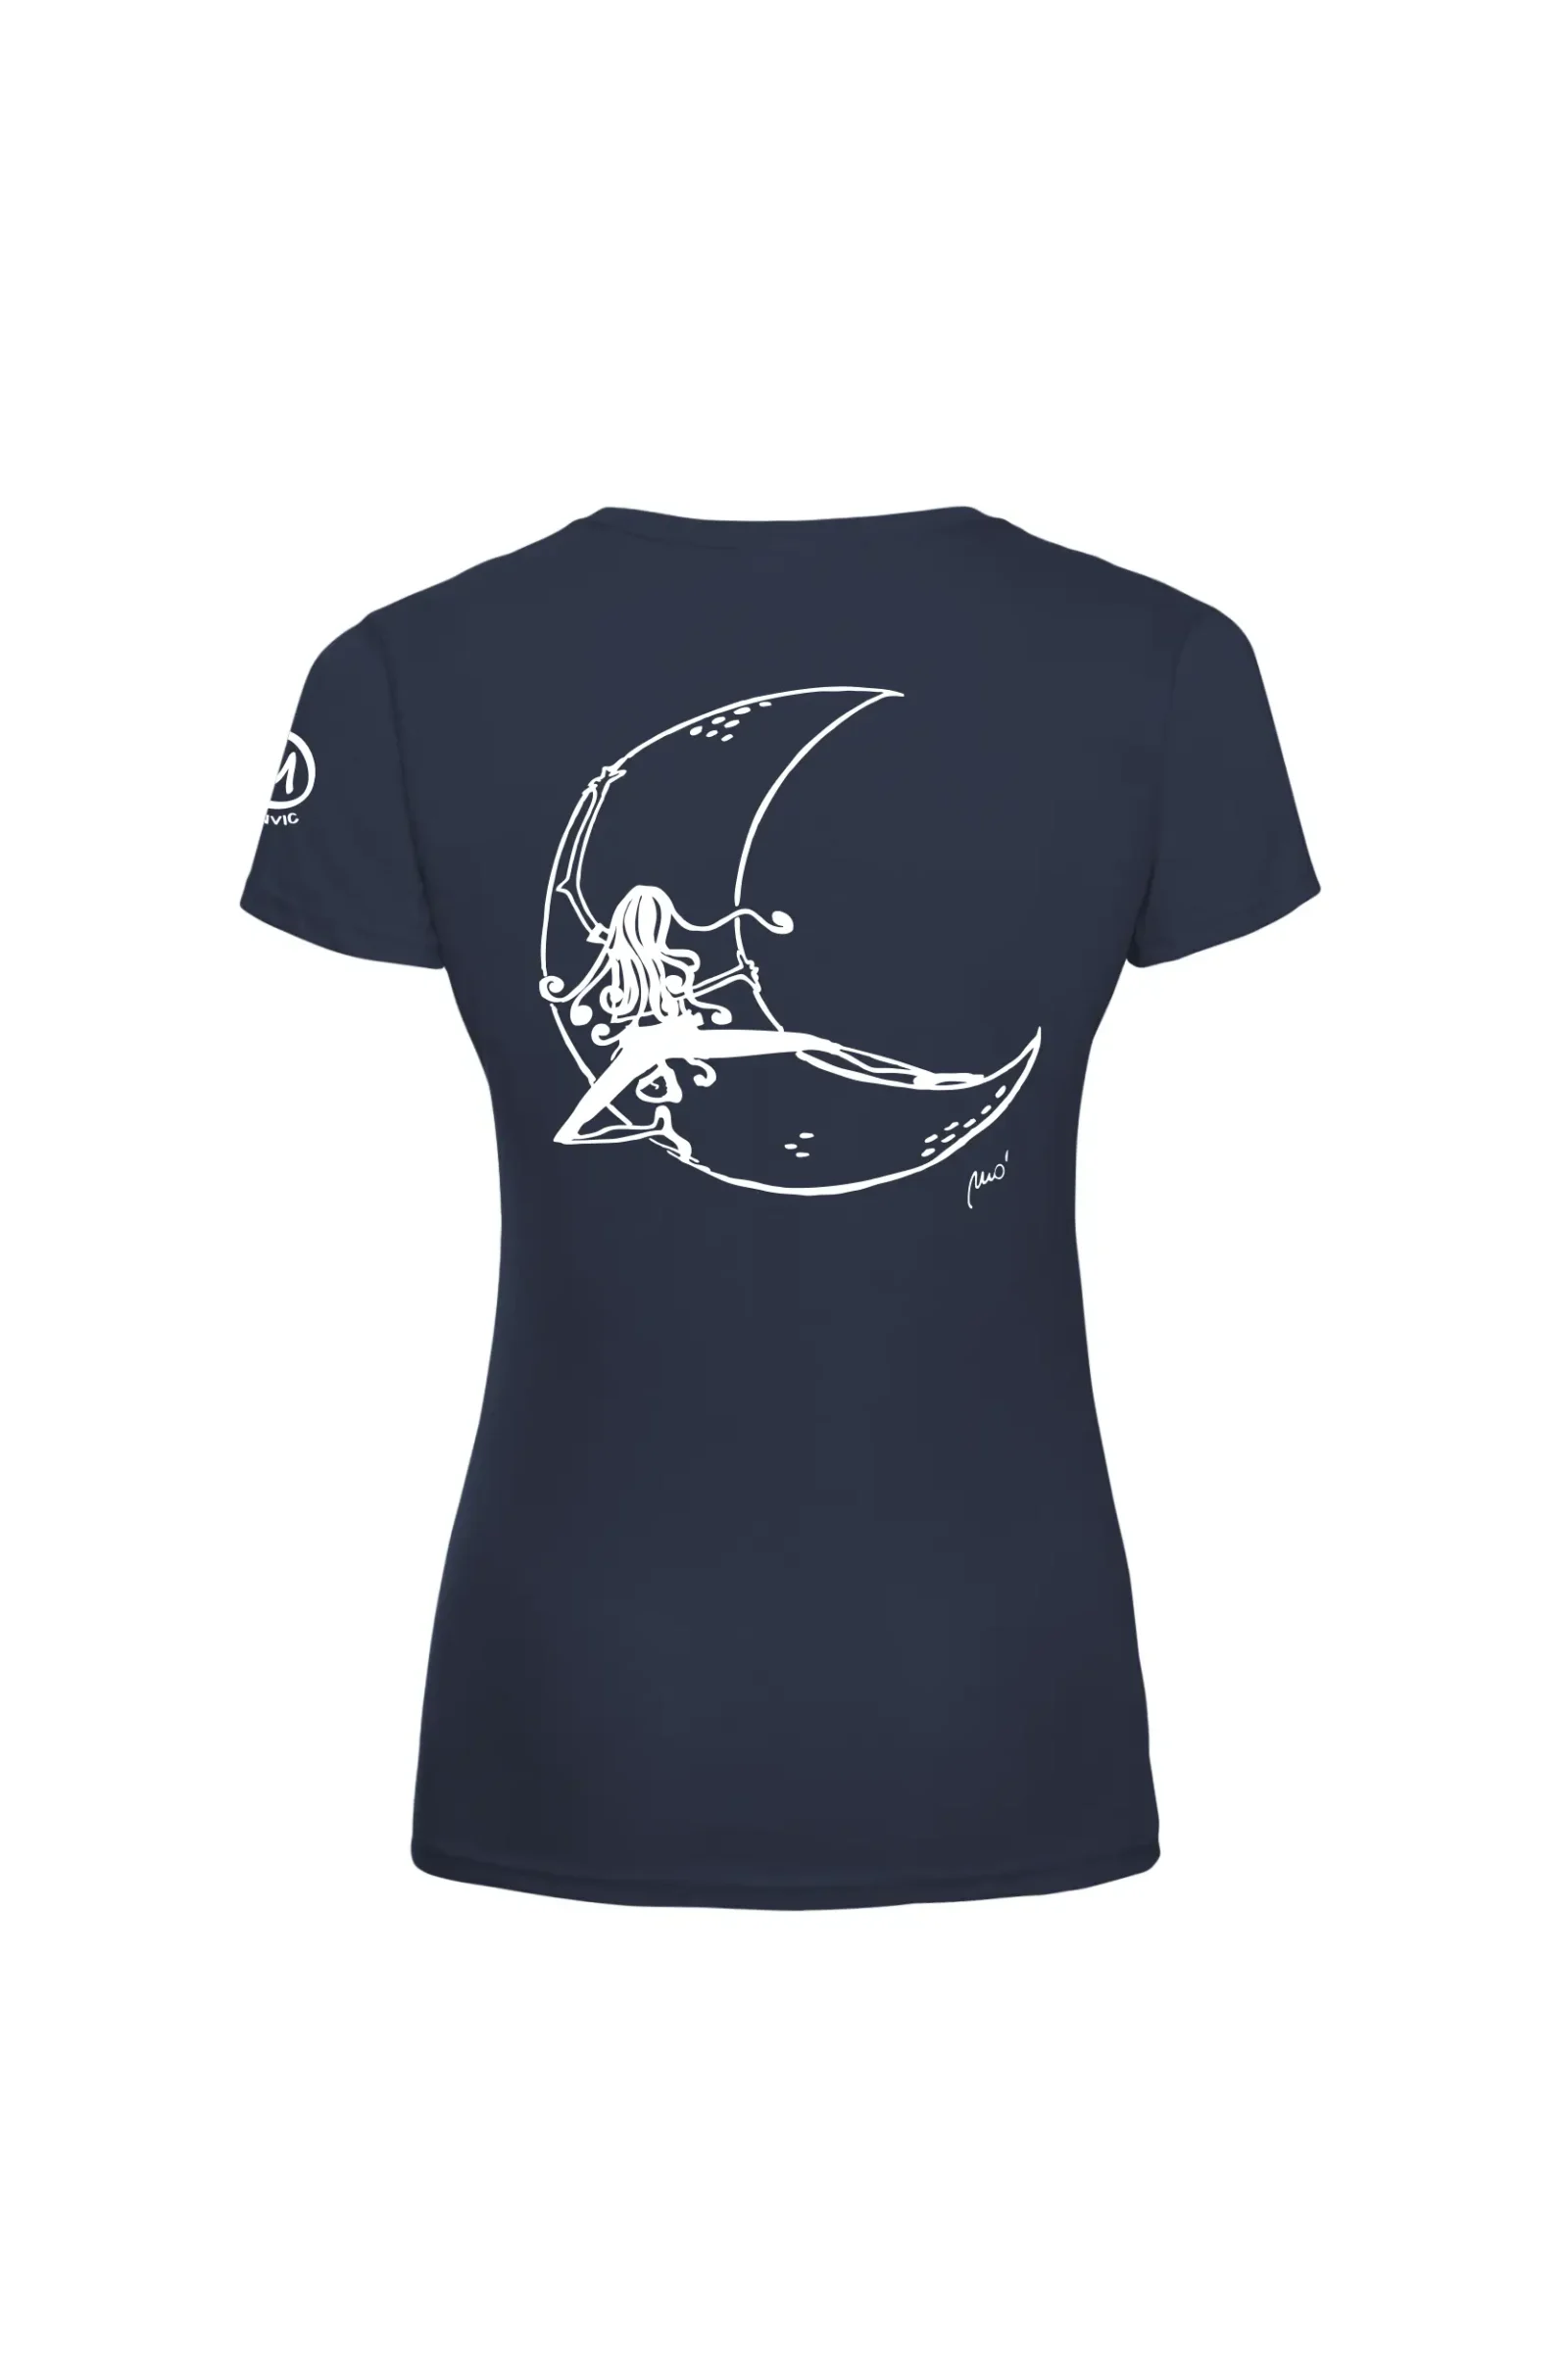 T-shirt escalade femme - coton bleu marine - "Moon" - SHARON by MONVIC